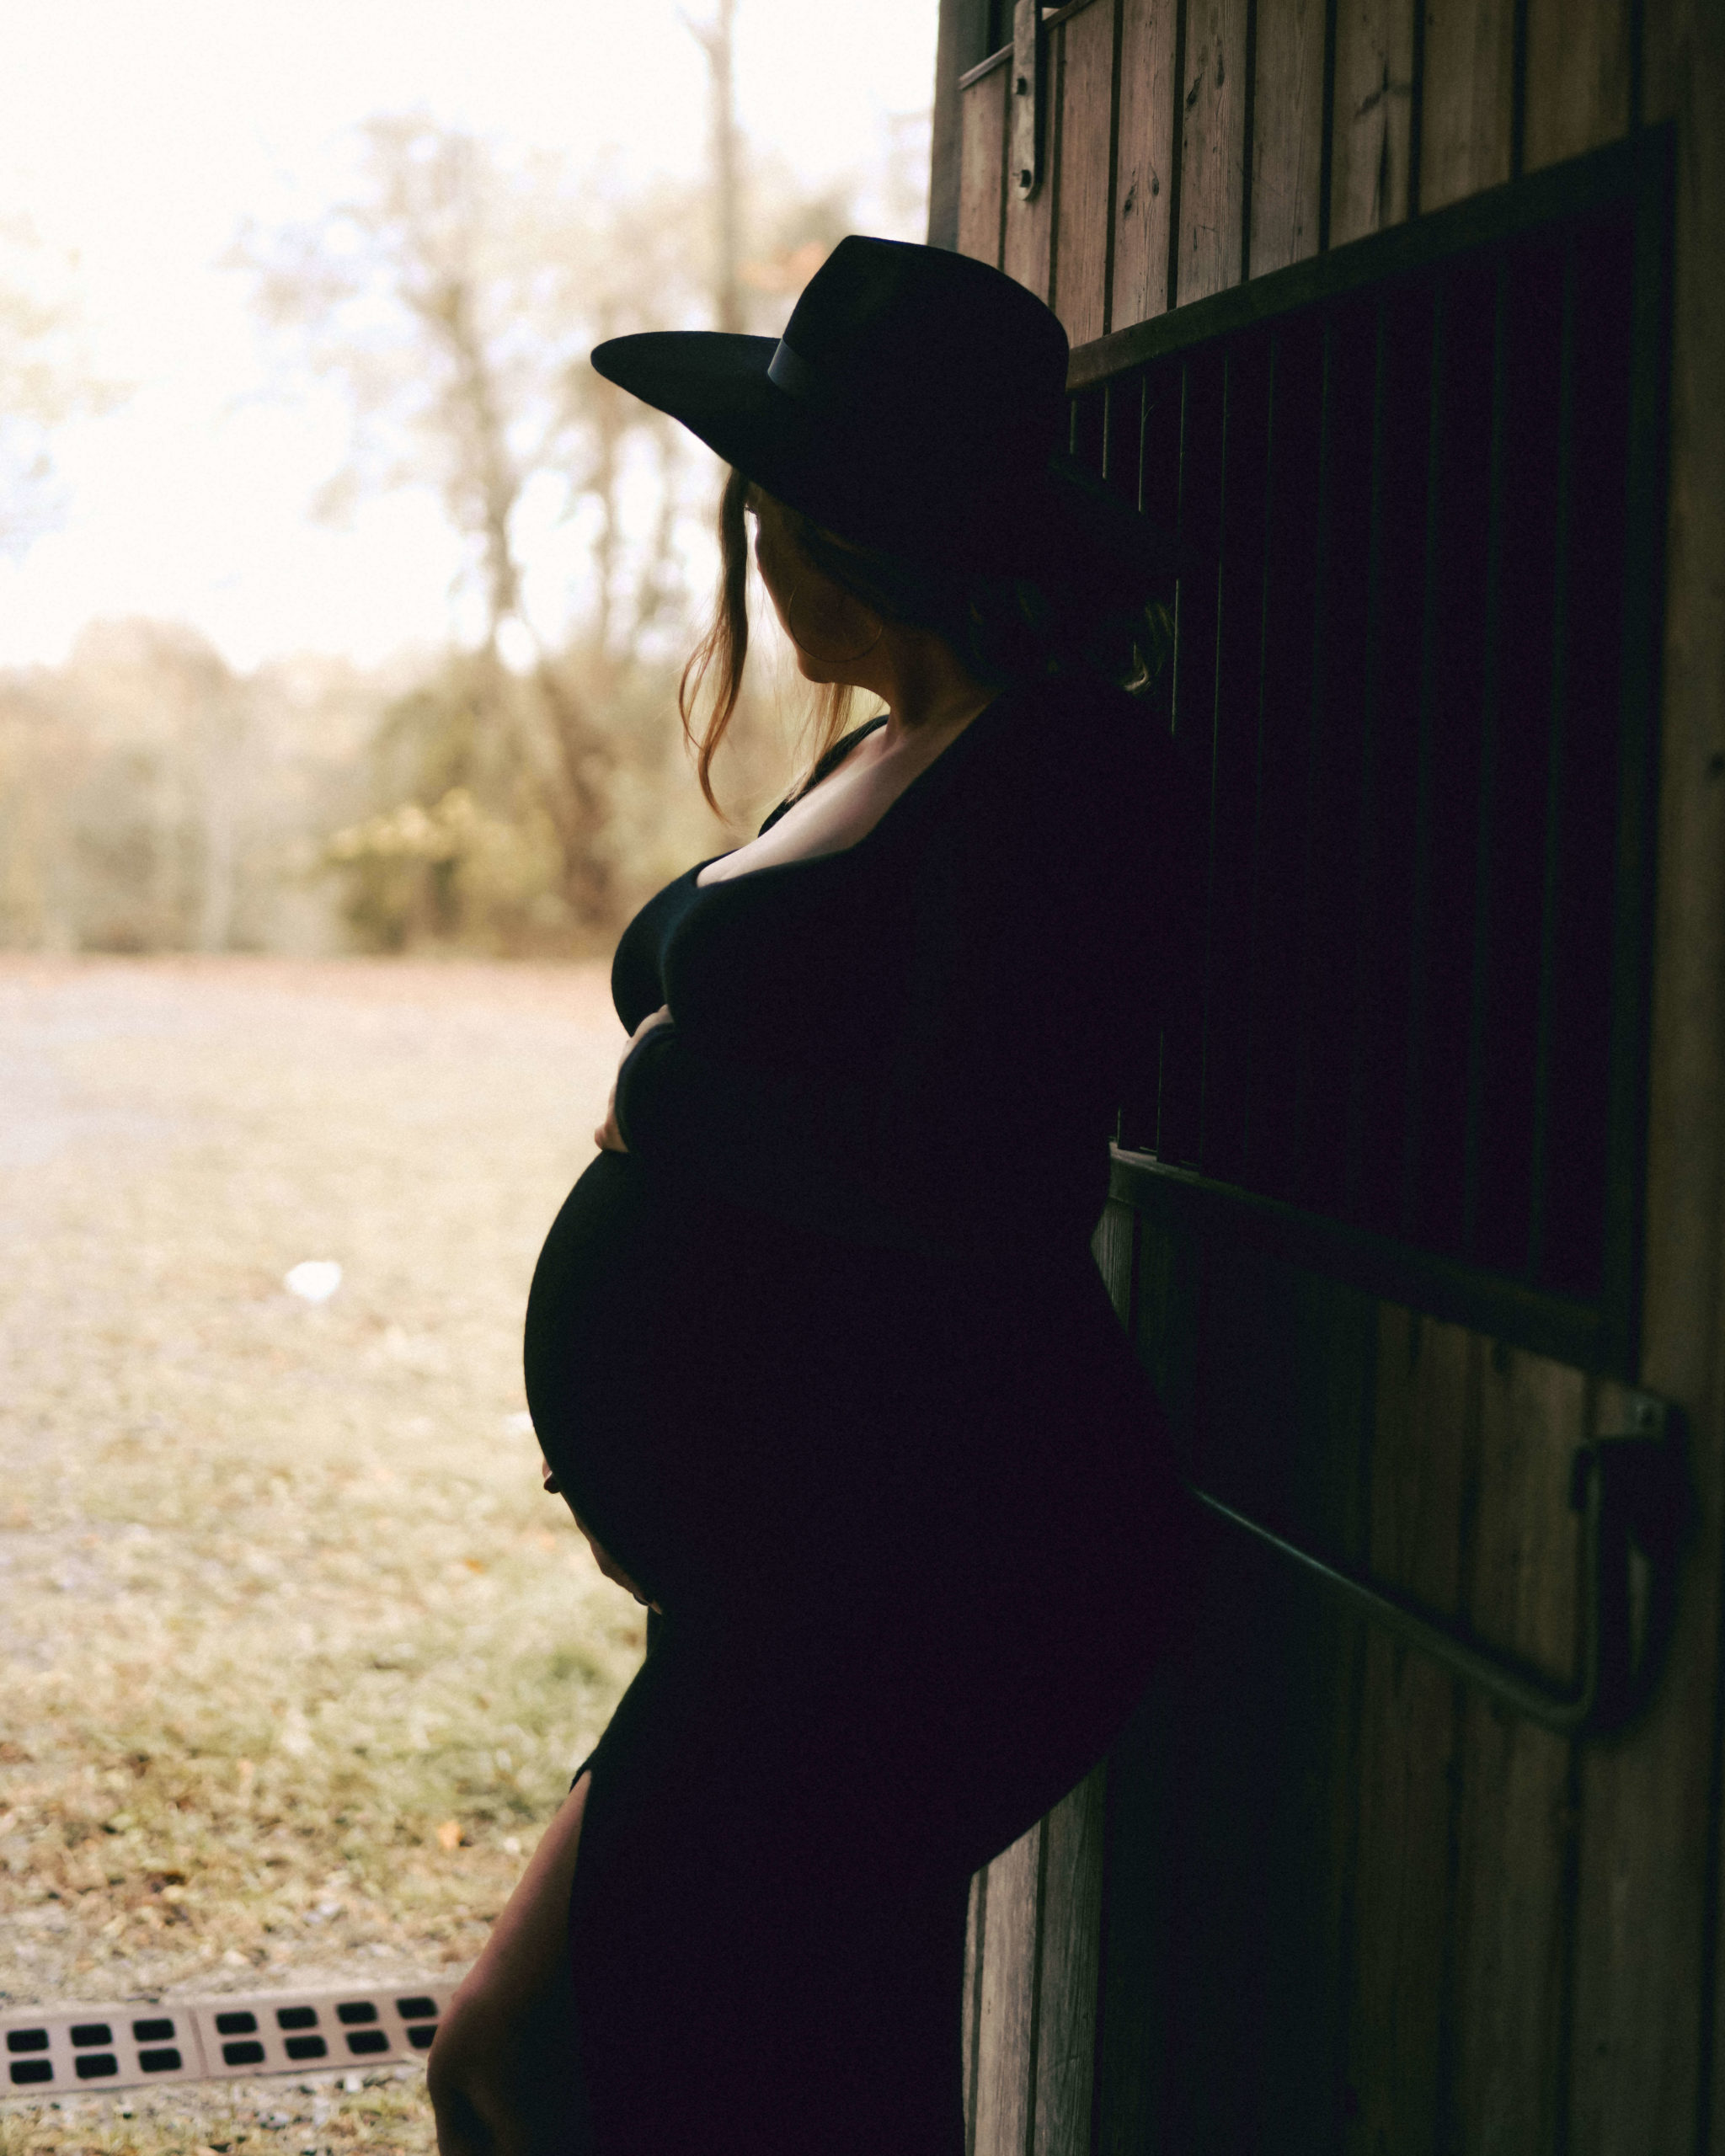 Choosing your maternity location